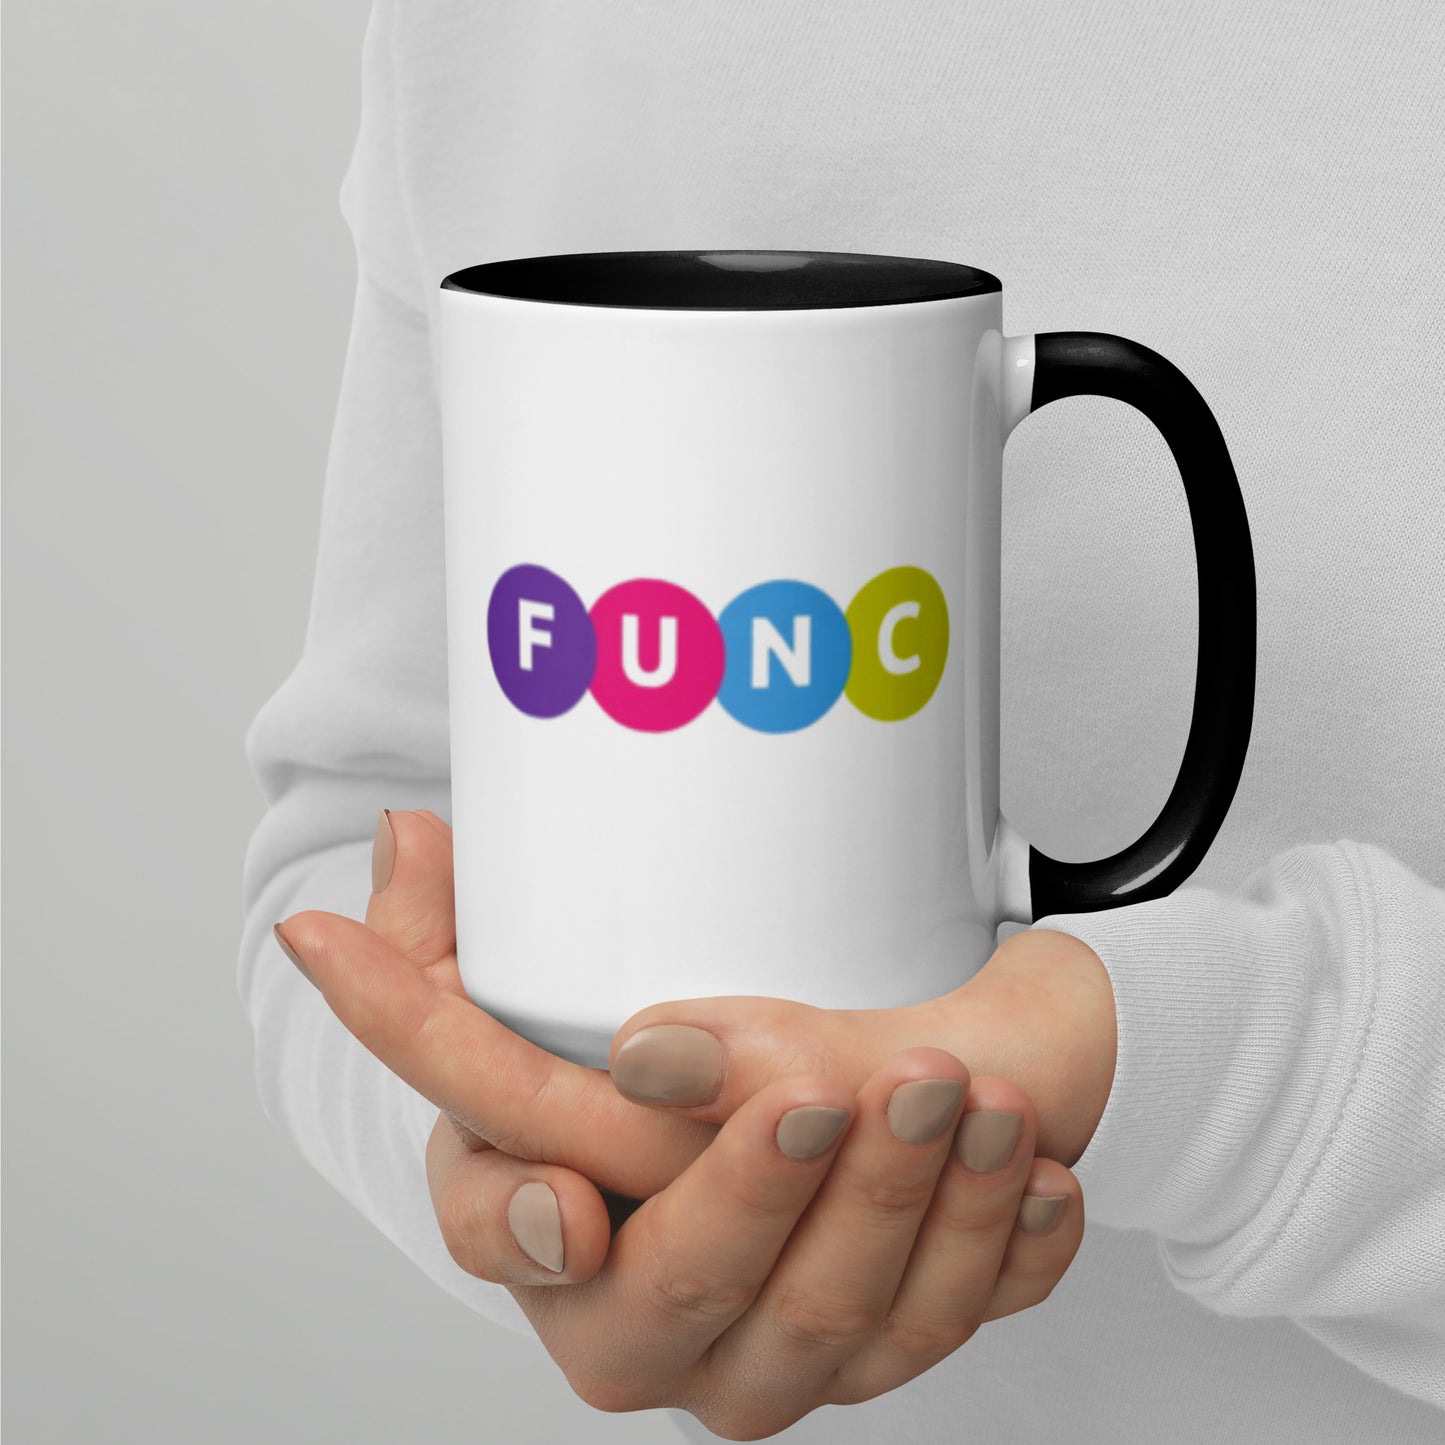 F.U.N.C. Mug With Color Inside